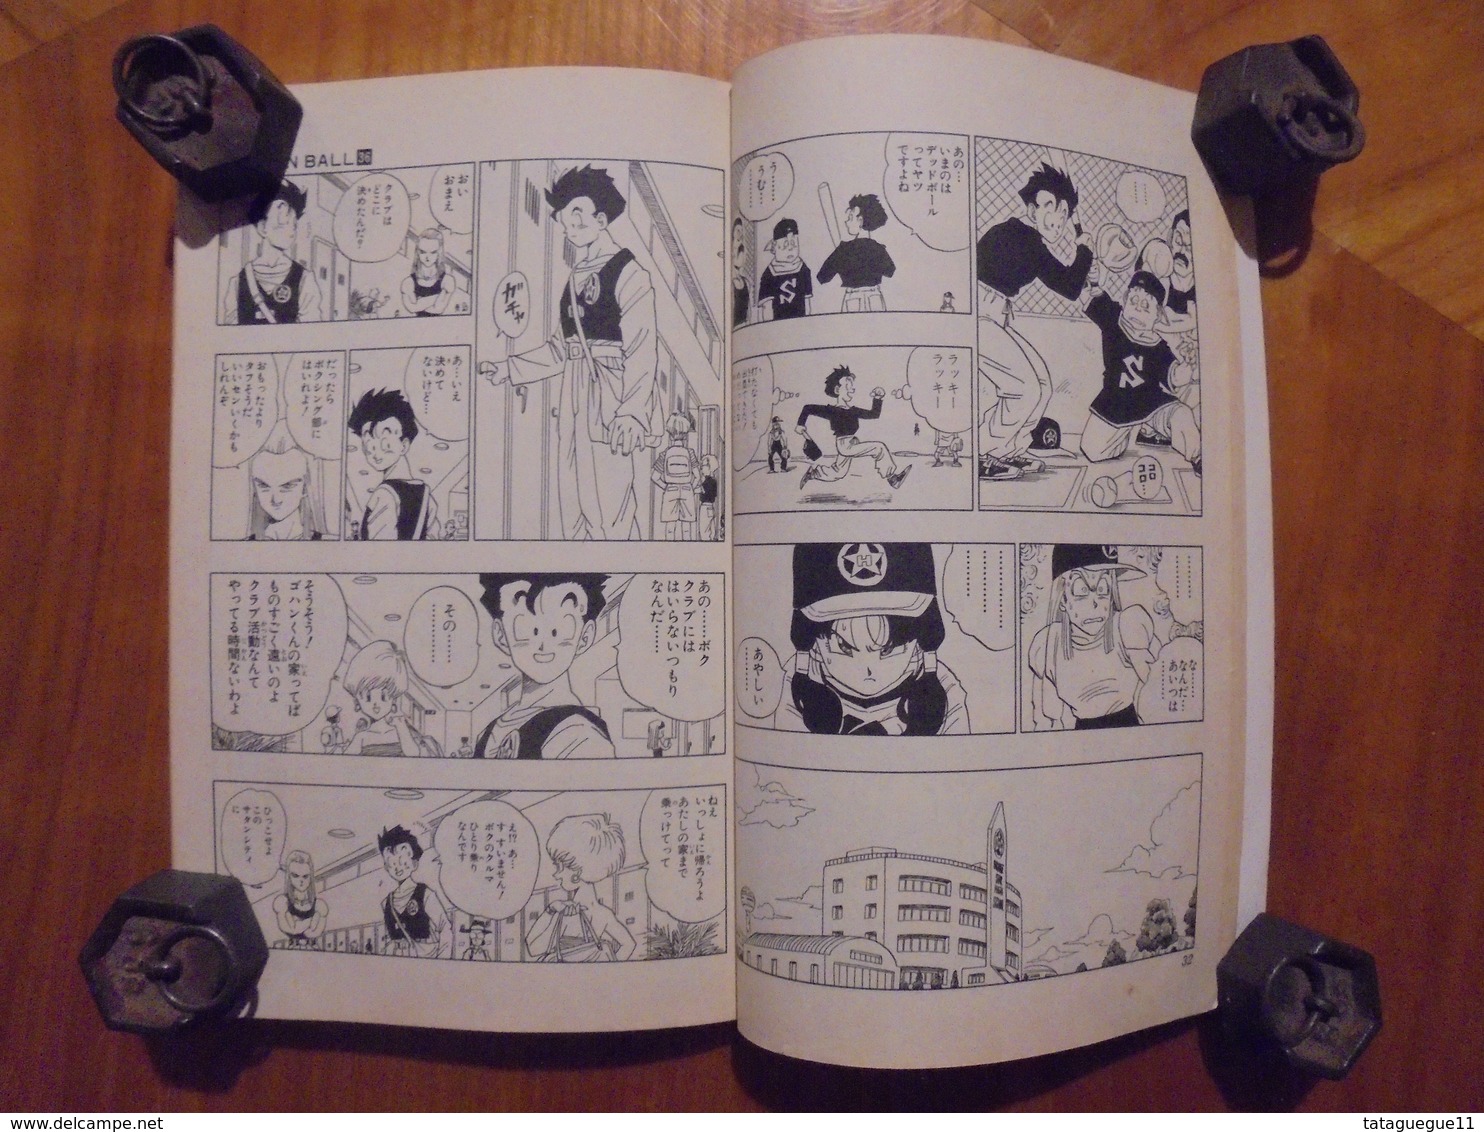 Ancien - BD Manga - DRAGON BALL Jump Comics VO - Mangas [original Edition]